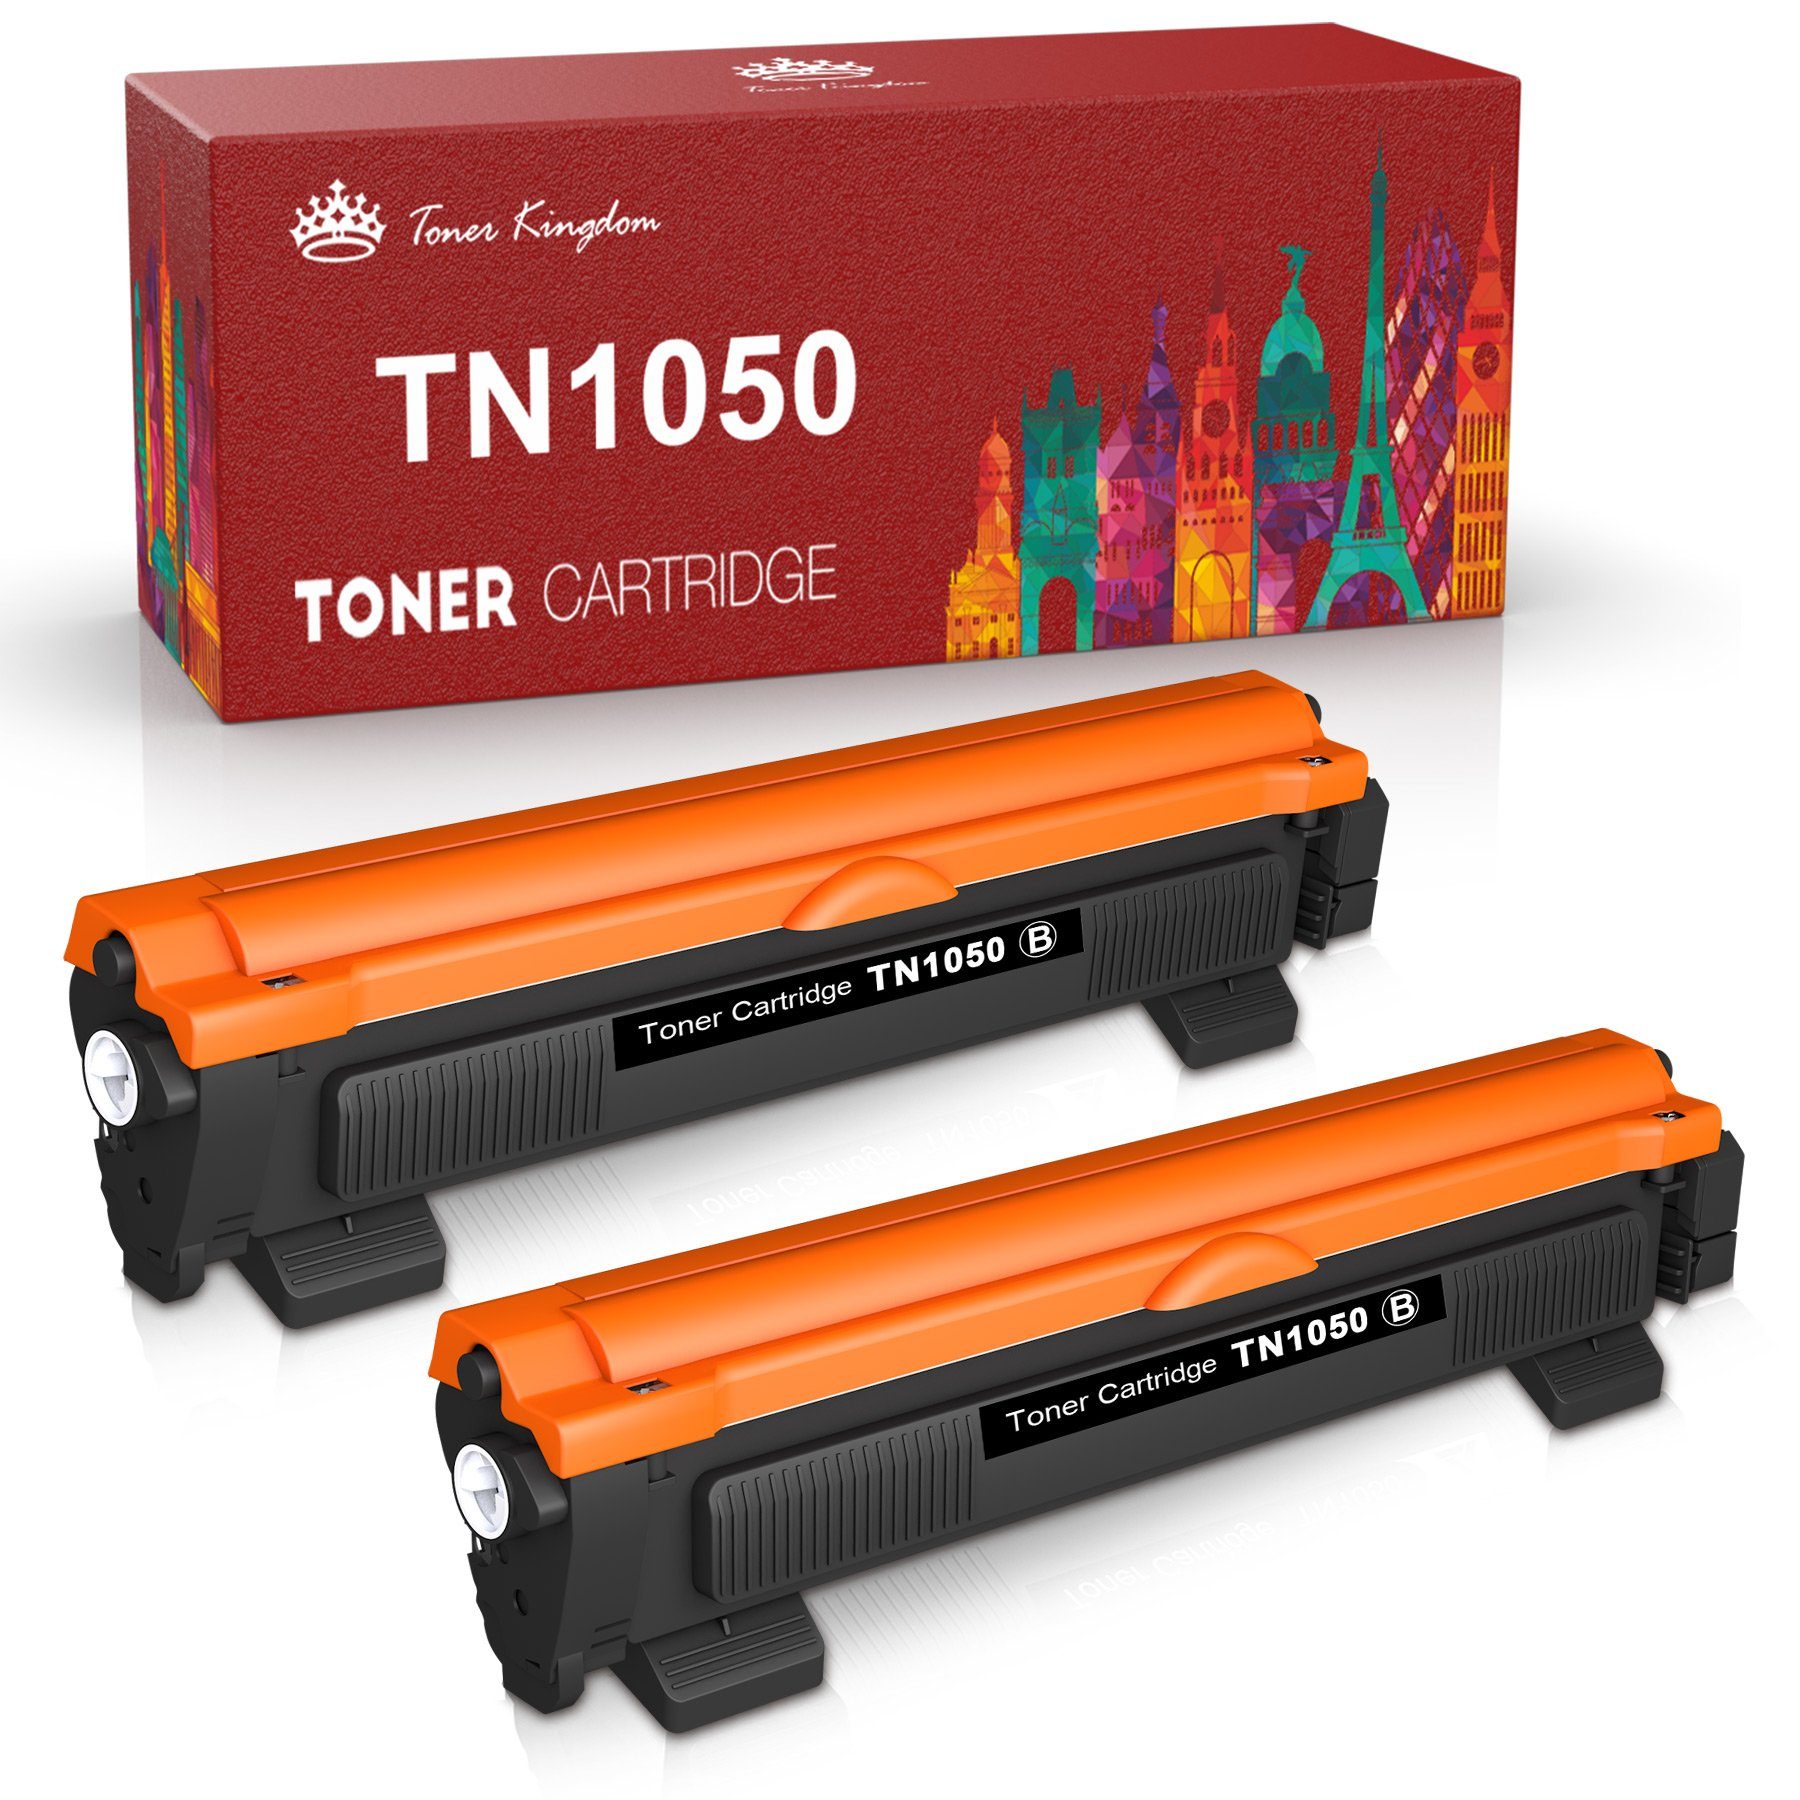 Toner Kingdom Tonerpatrone TN 1050 für Brother TN-1050 HL-1110 TN1050